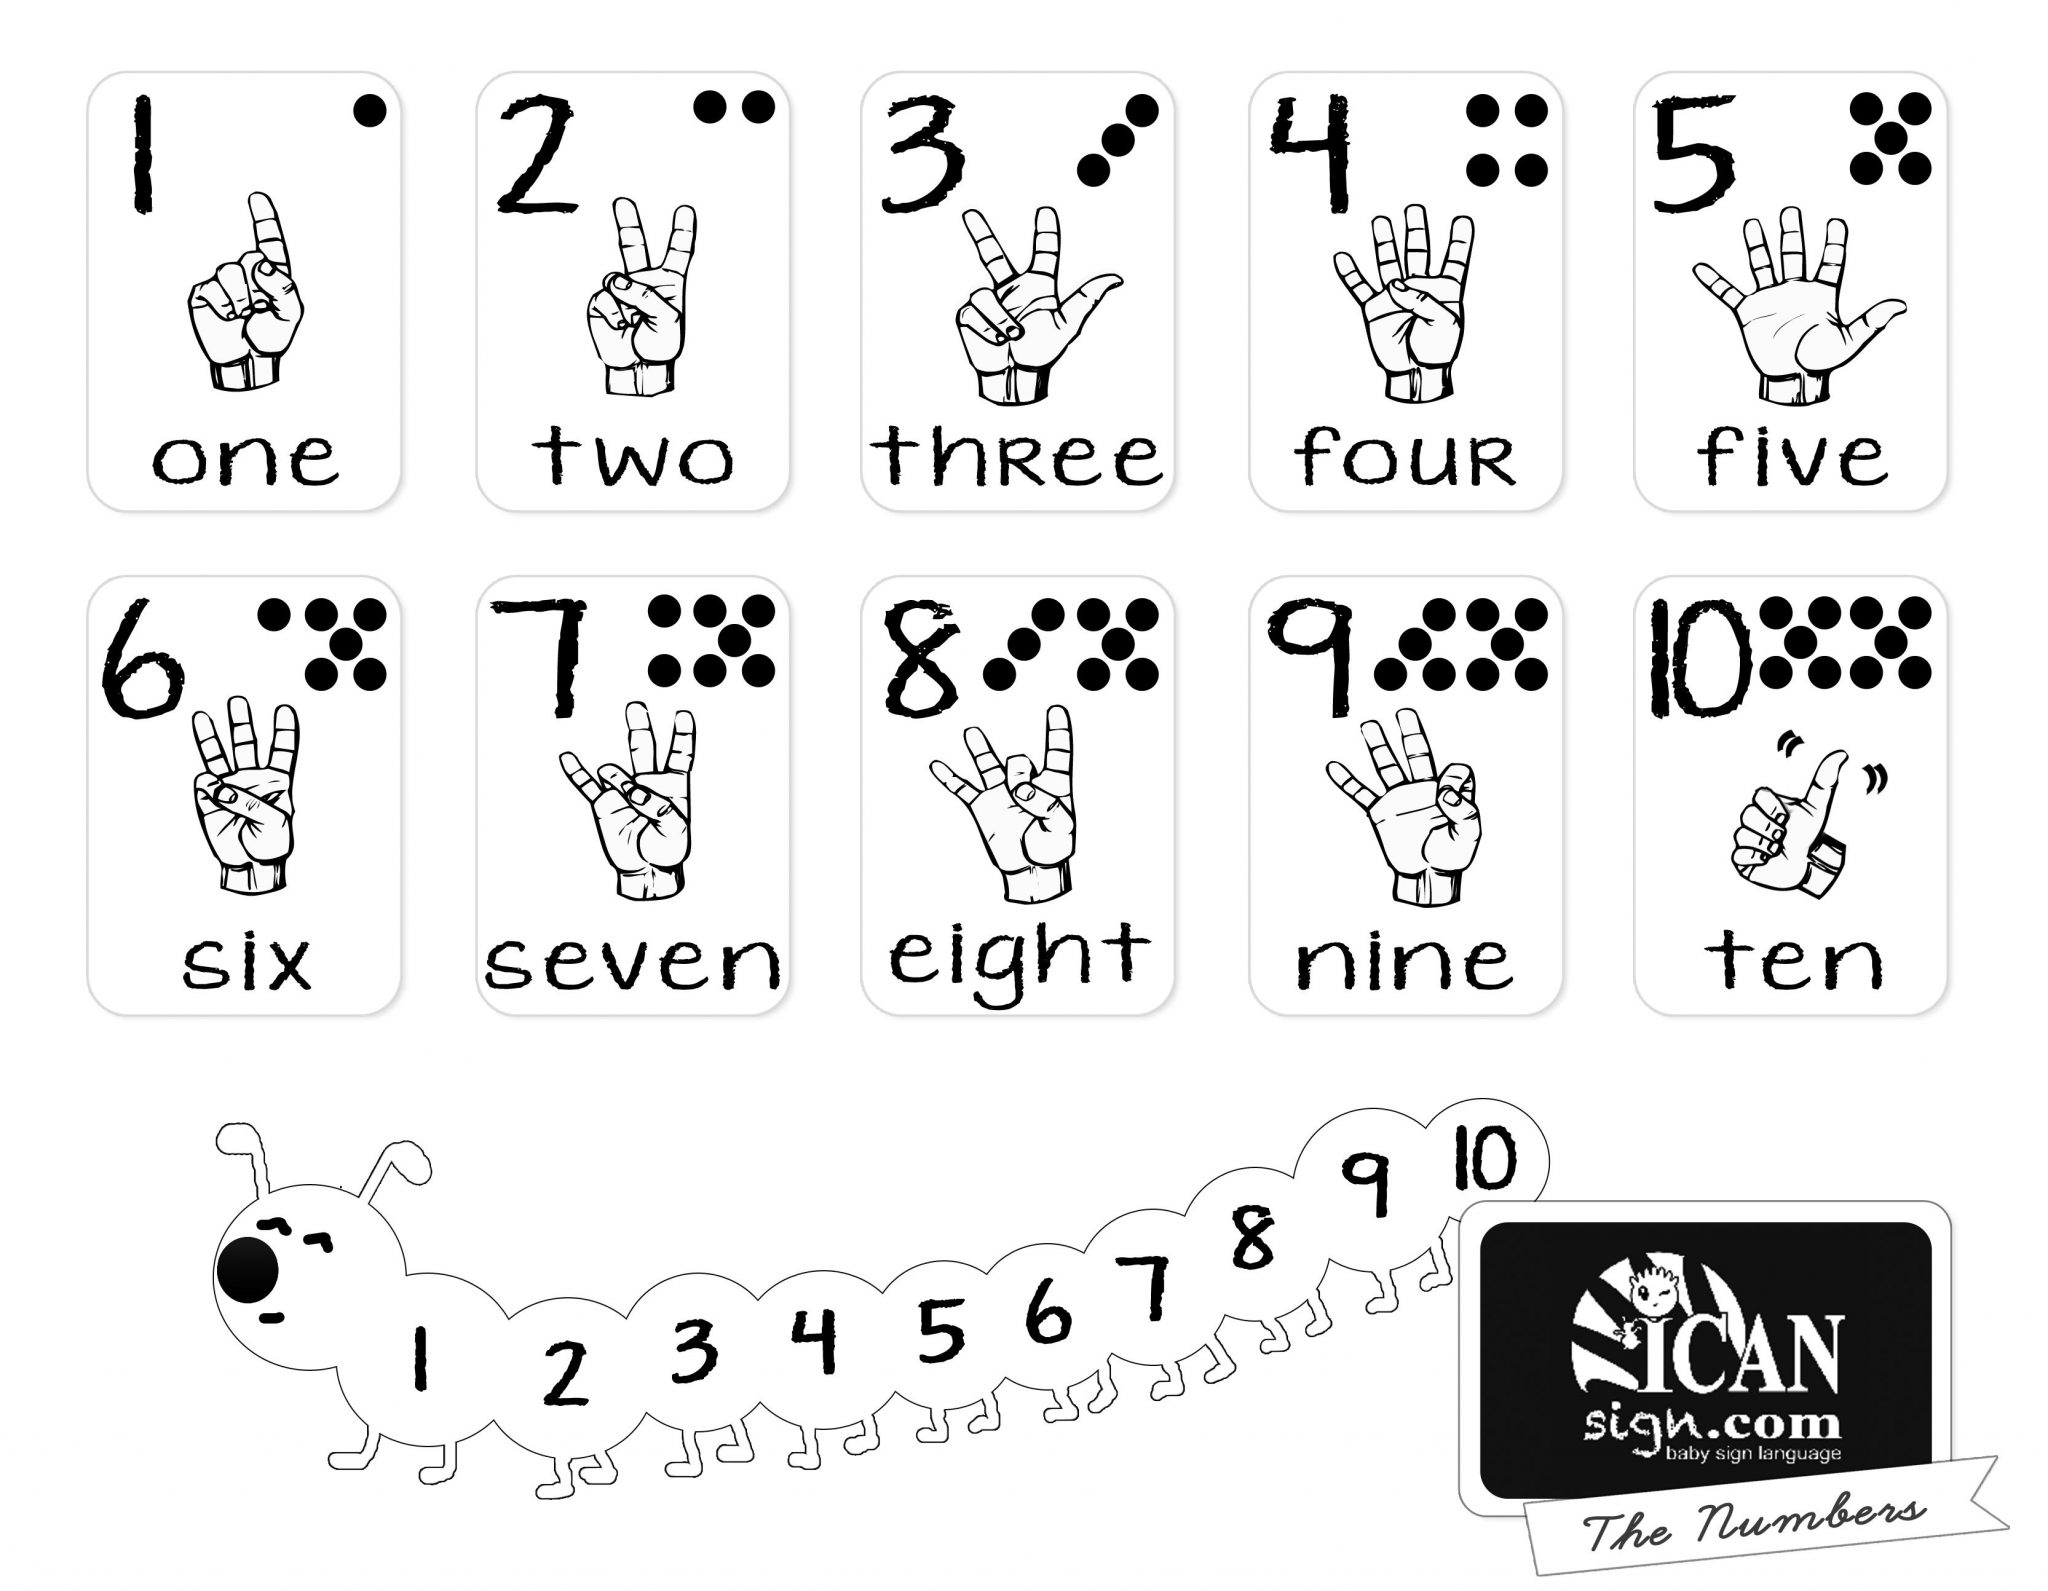 printer-friendly-asl-numbers-chart-free-printable-from-printable-bingo-cards